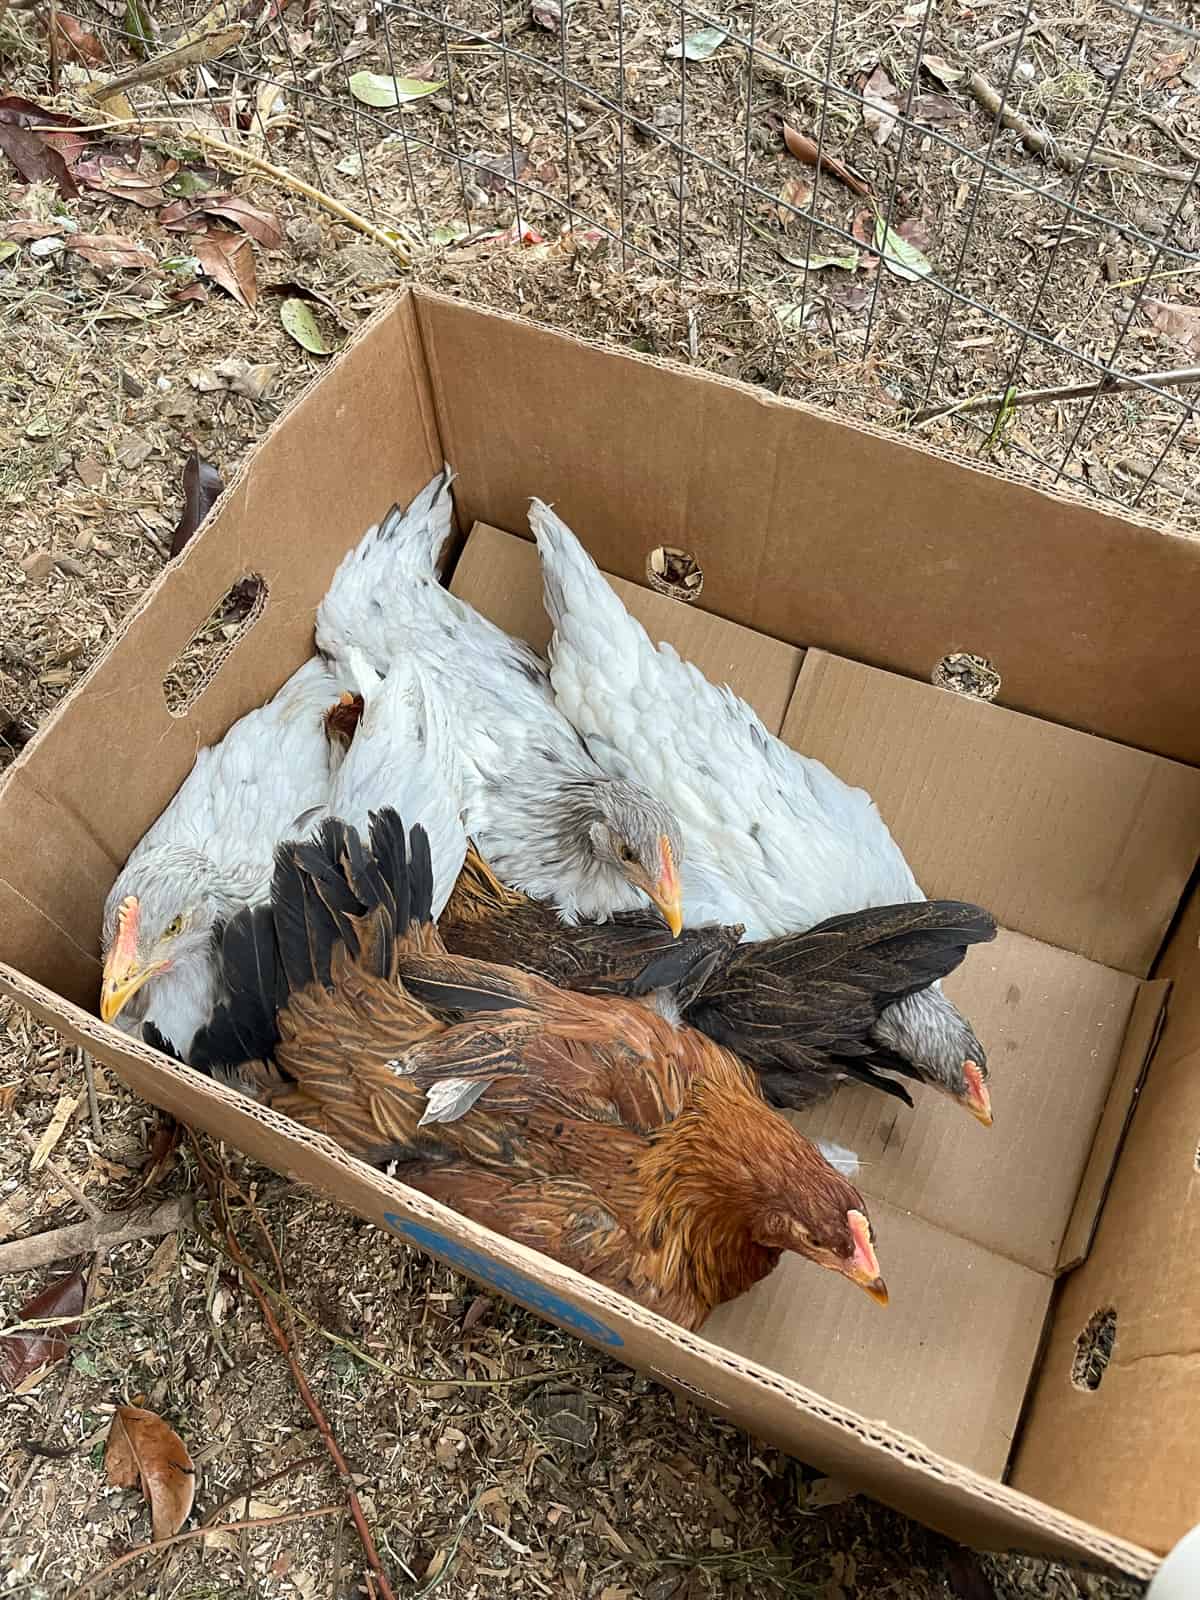 chickens in a cardboard box